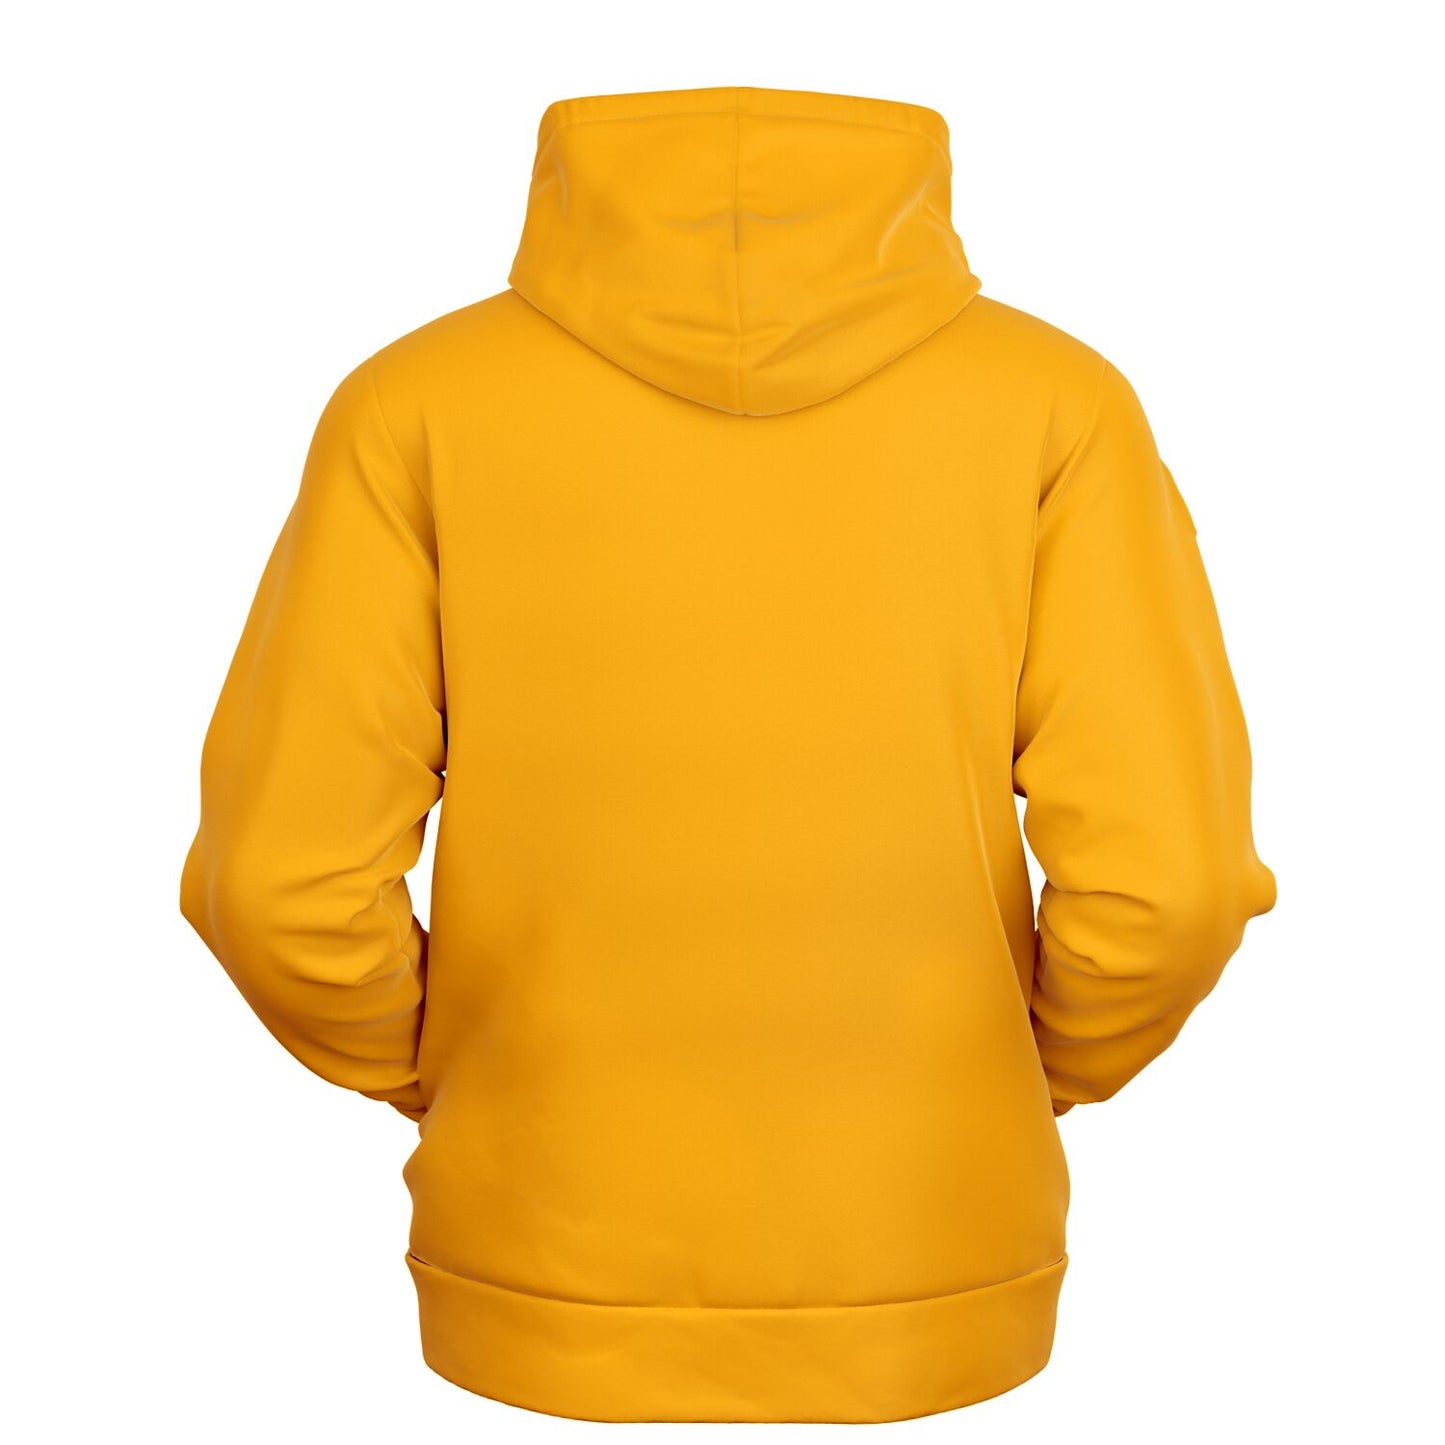 Dynem® Athletic Hoodie in Yellow and Black